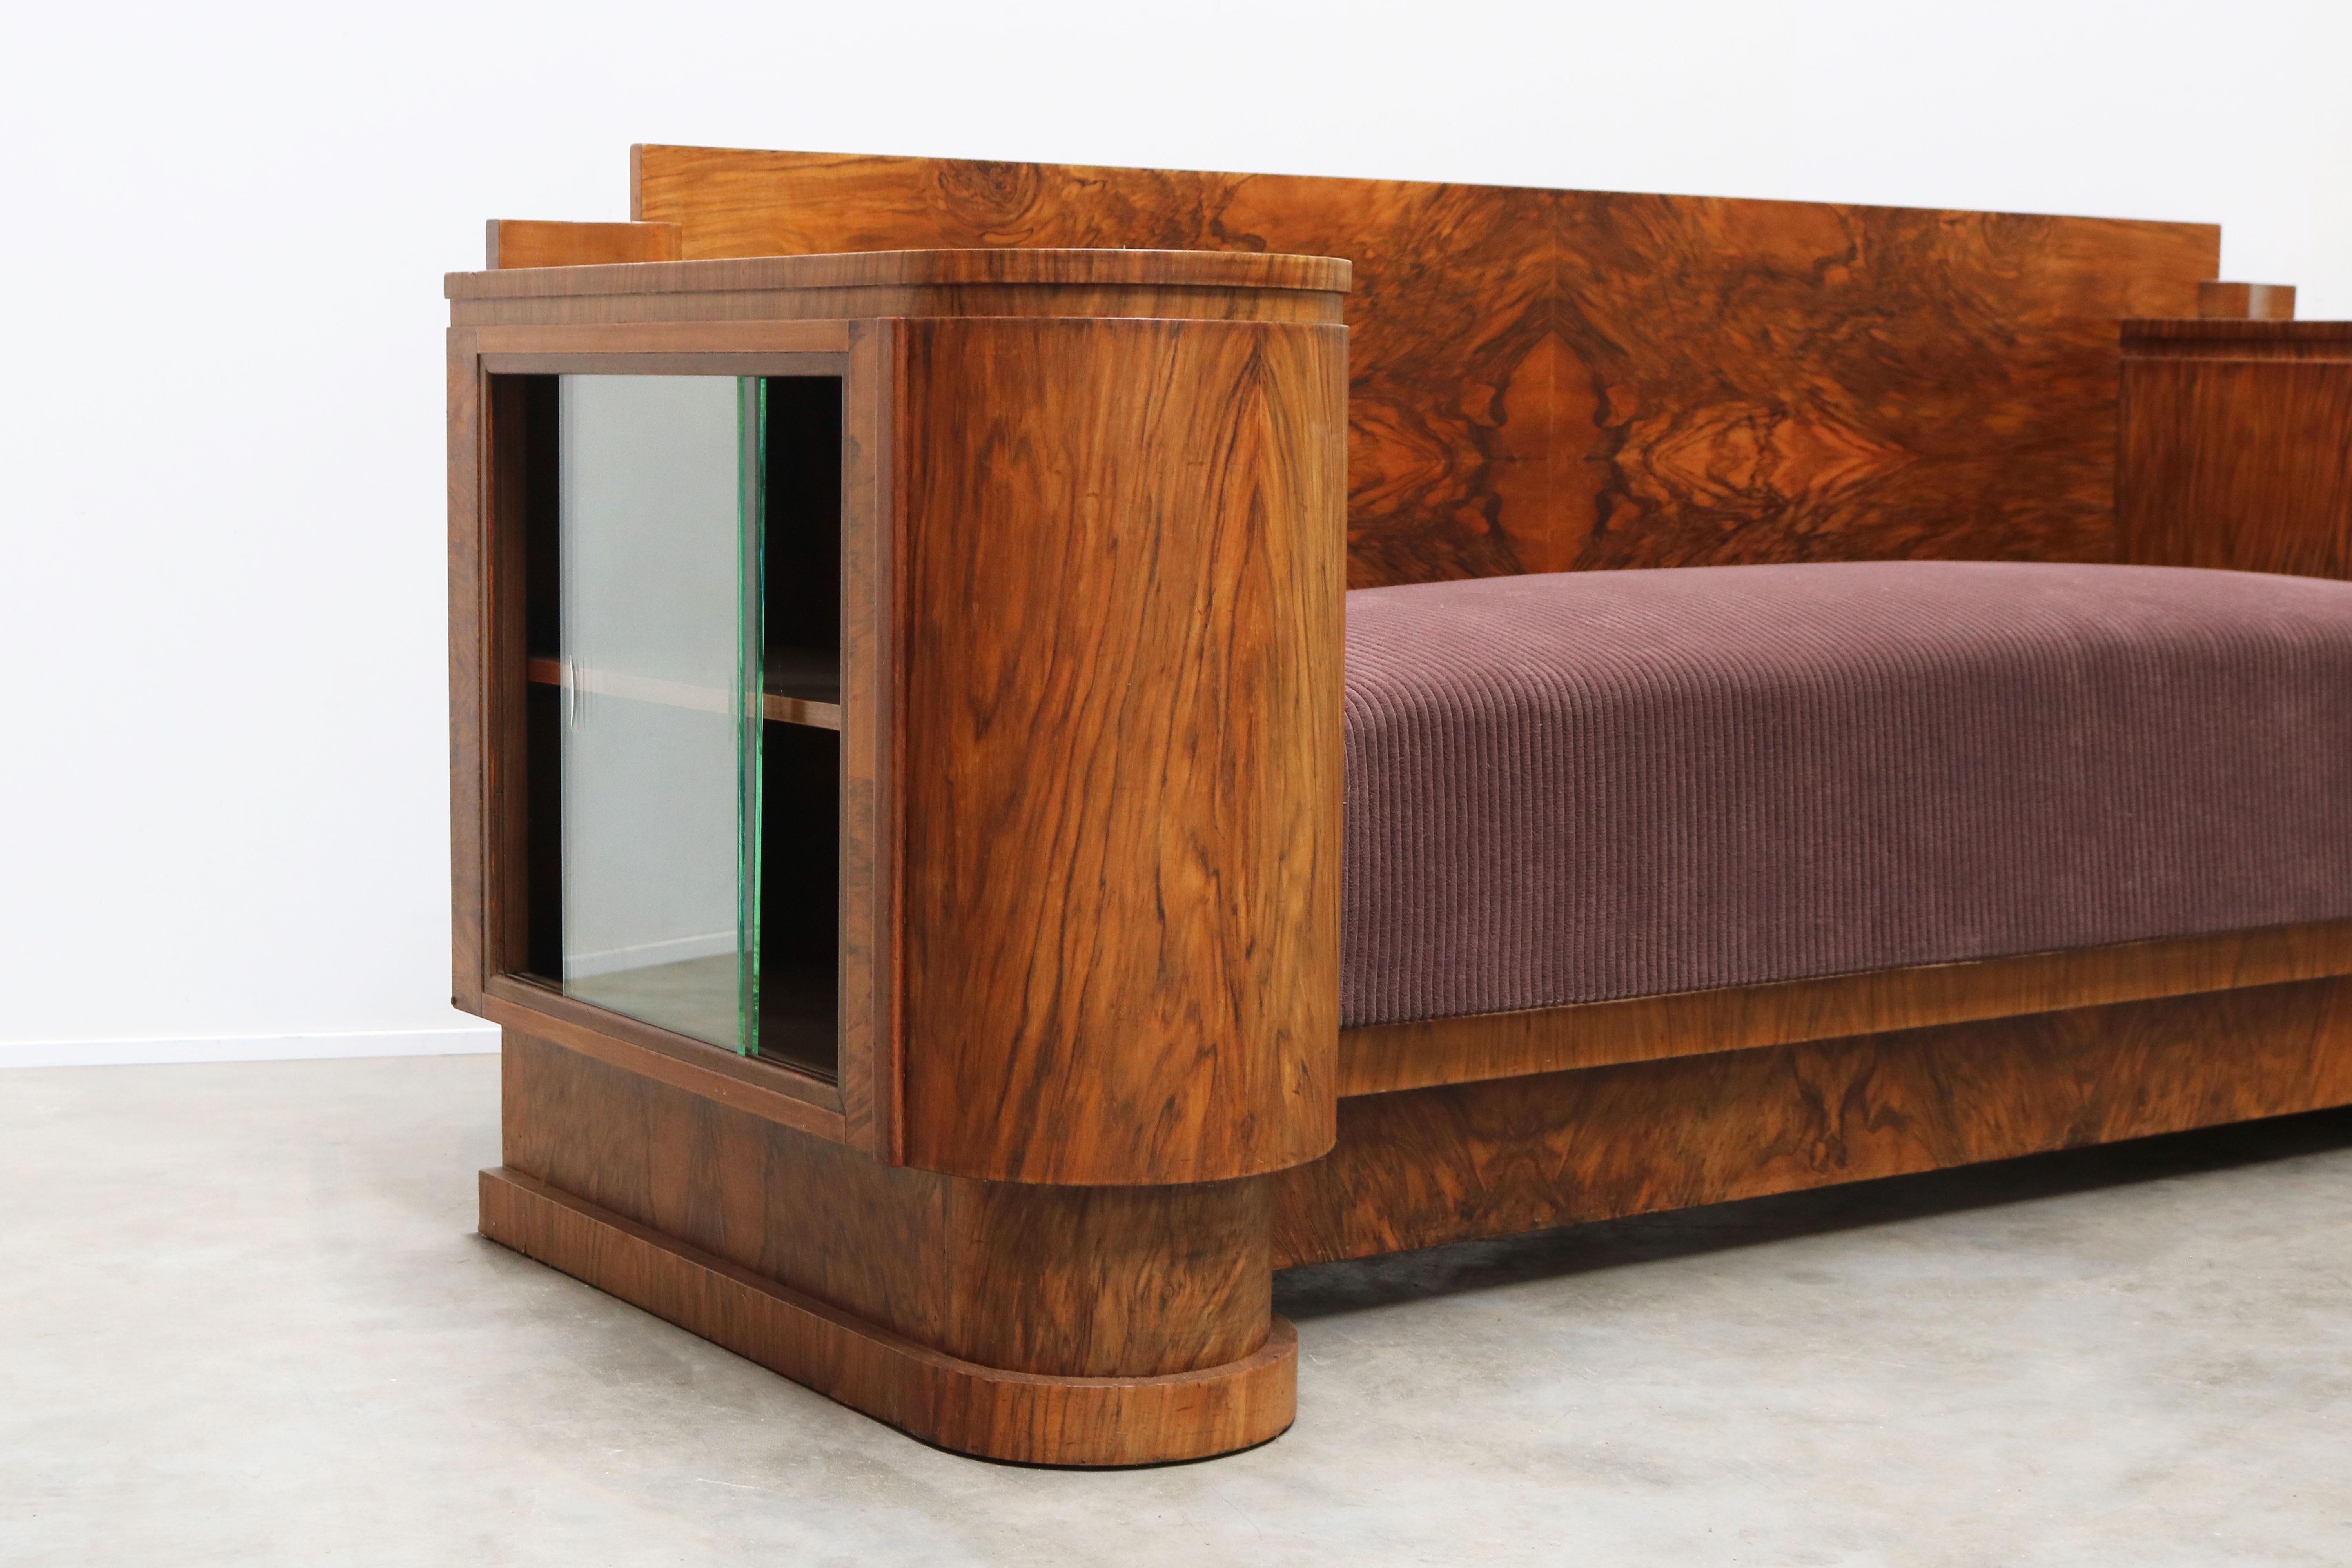 Dutch Art Deco Design Sofa by Pander 1930 Walnut Burl Wood with Display Cabinets In Good Condition For Sale In Ijzendijke, NL